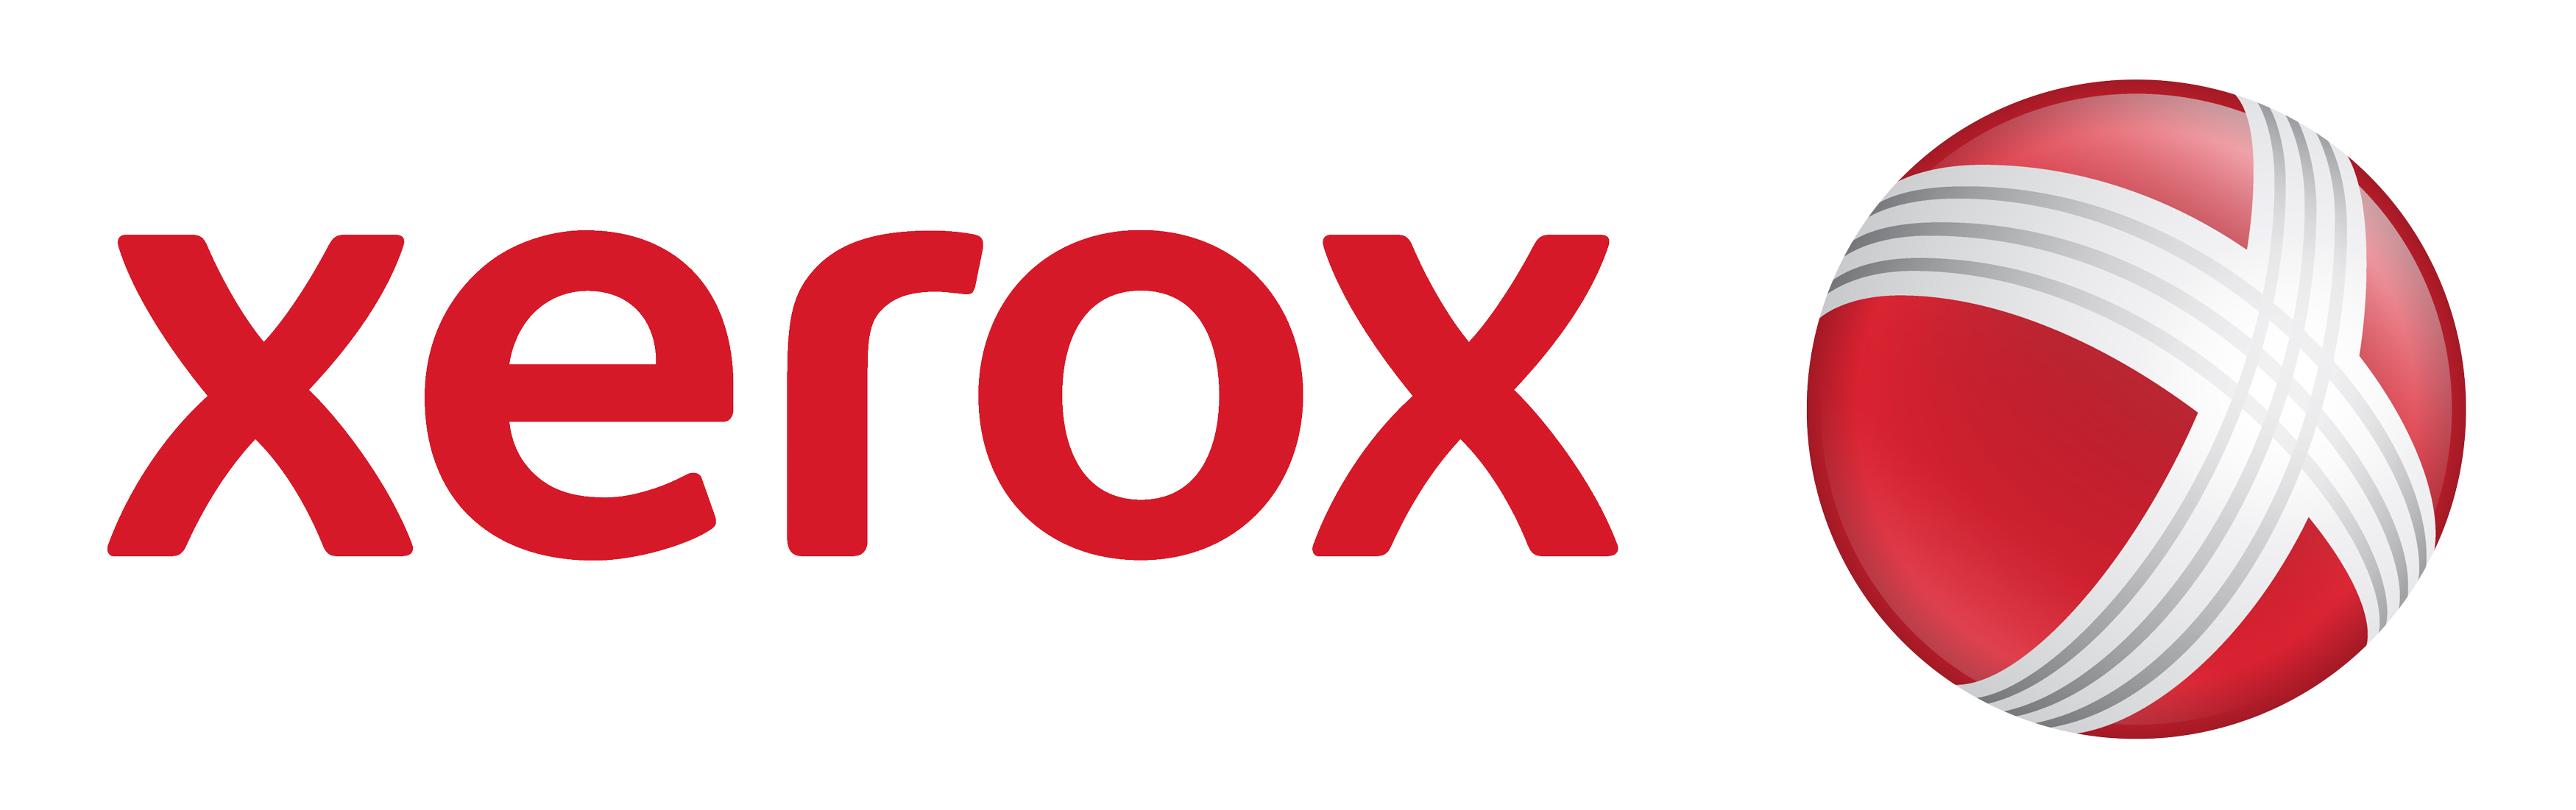 png 250x221 Xerox logo clear 